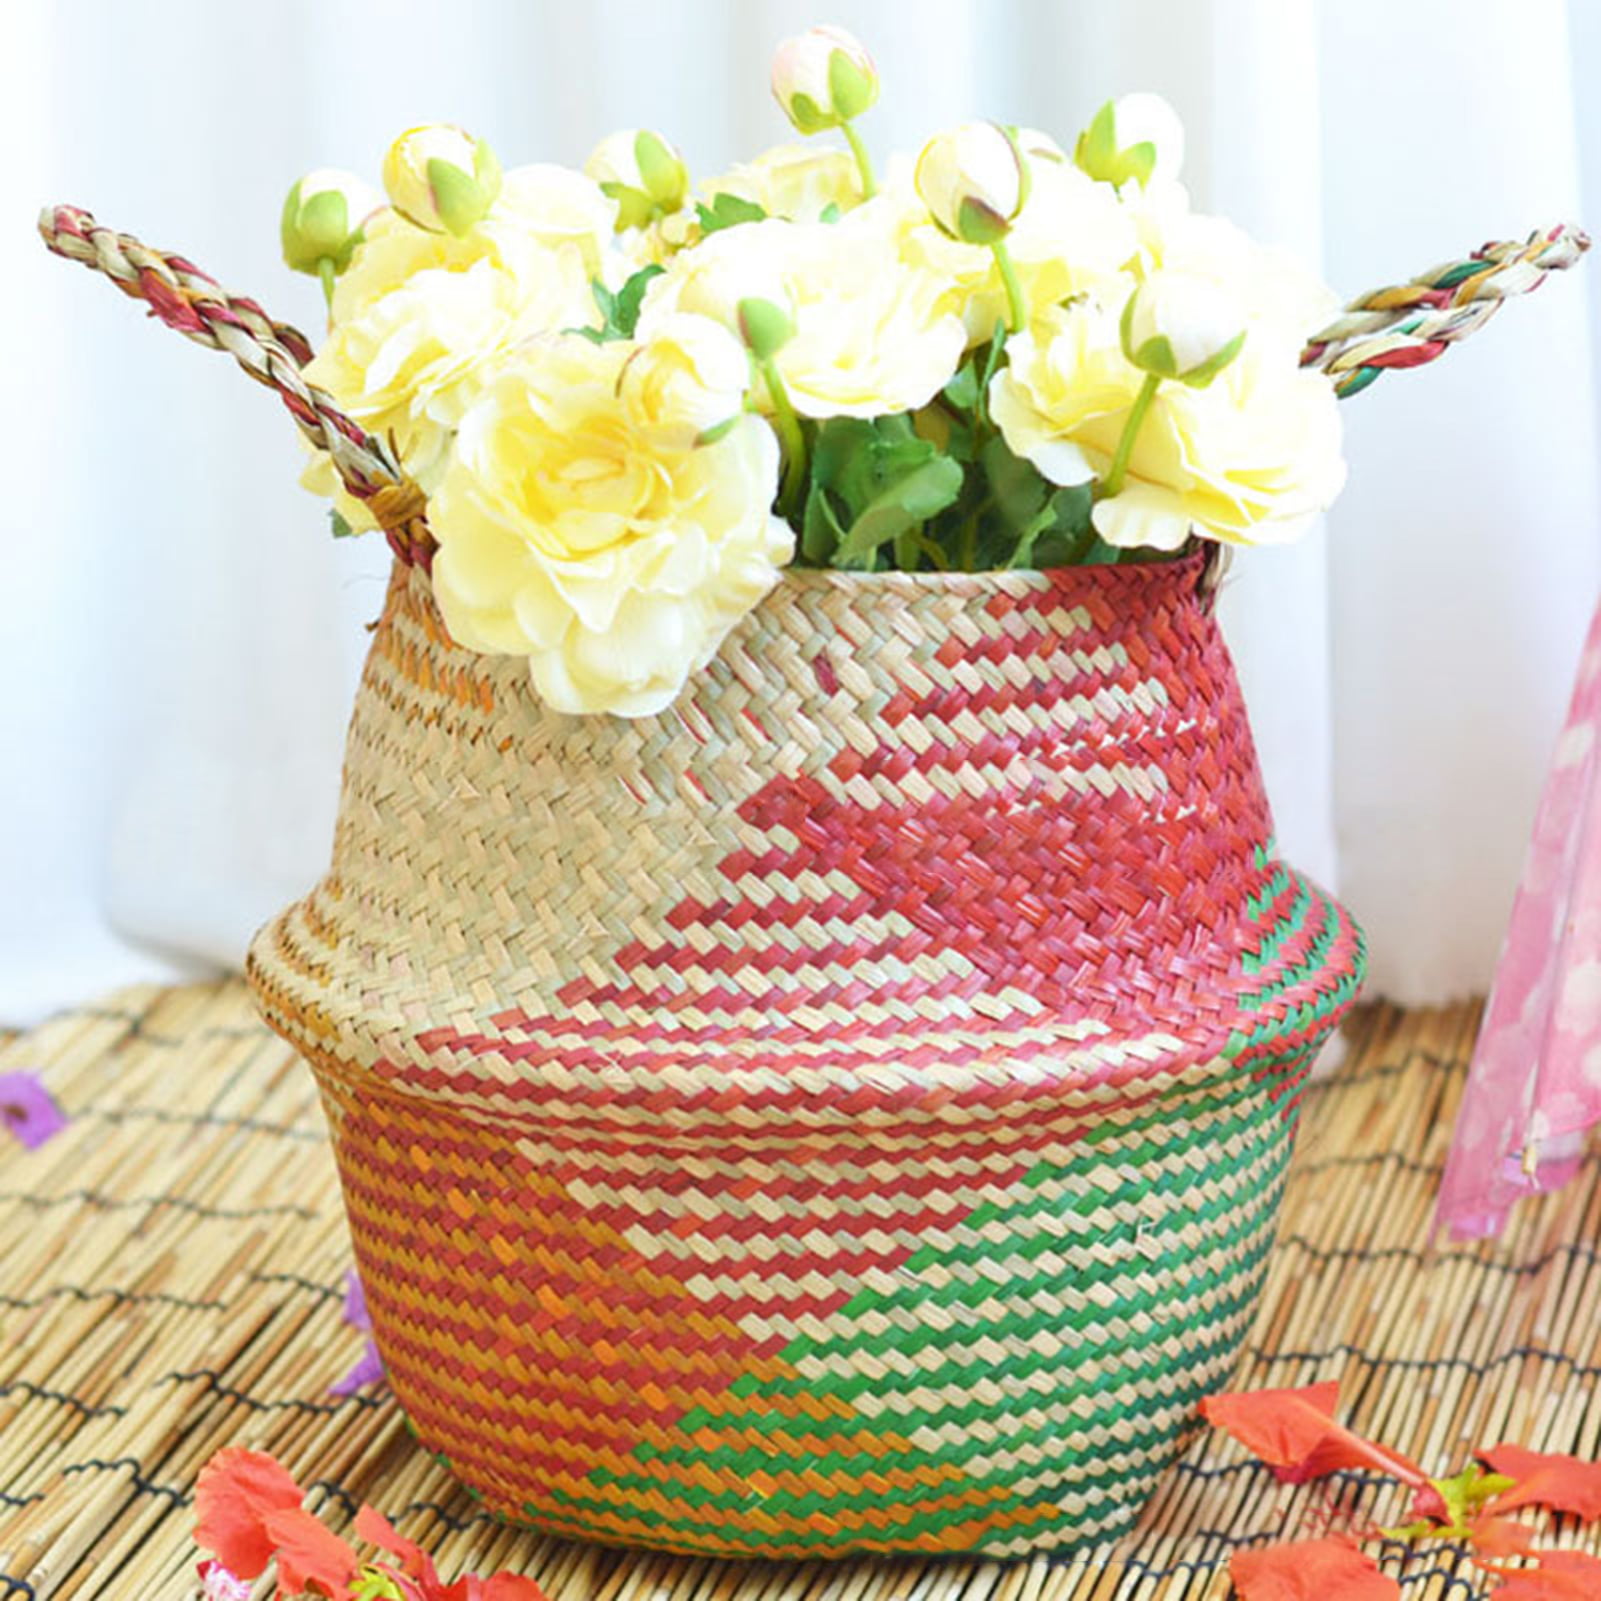 Woven Storage Flower Plants Seagrass Wicker Basket Straw Pots Home Garden Decor 